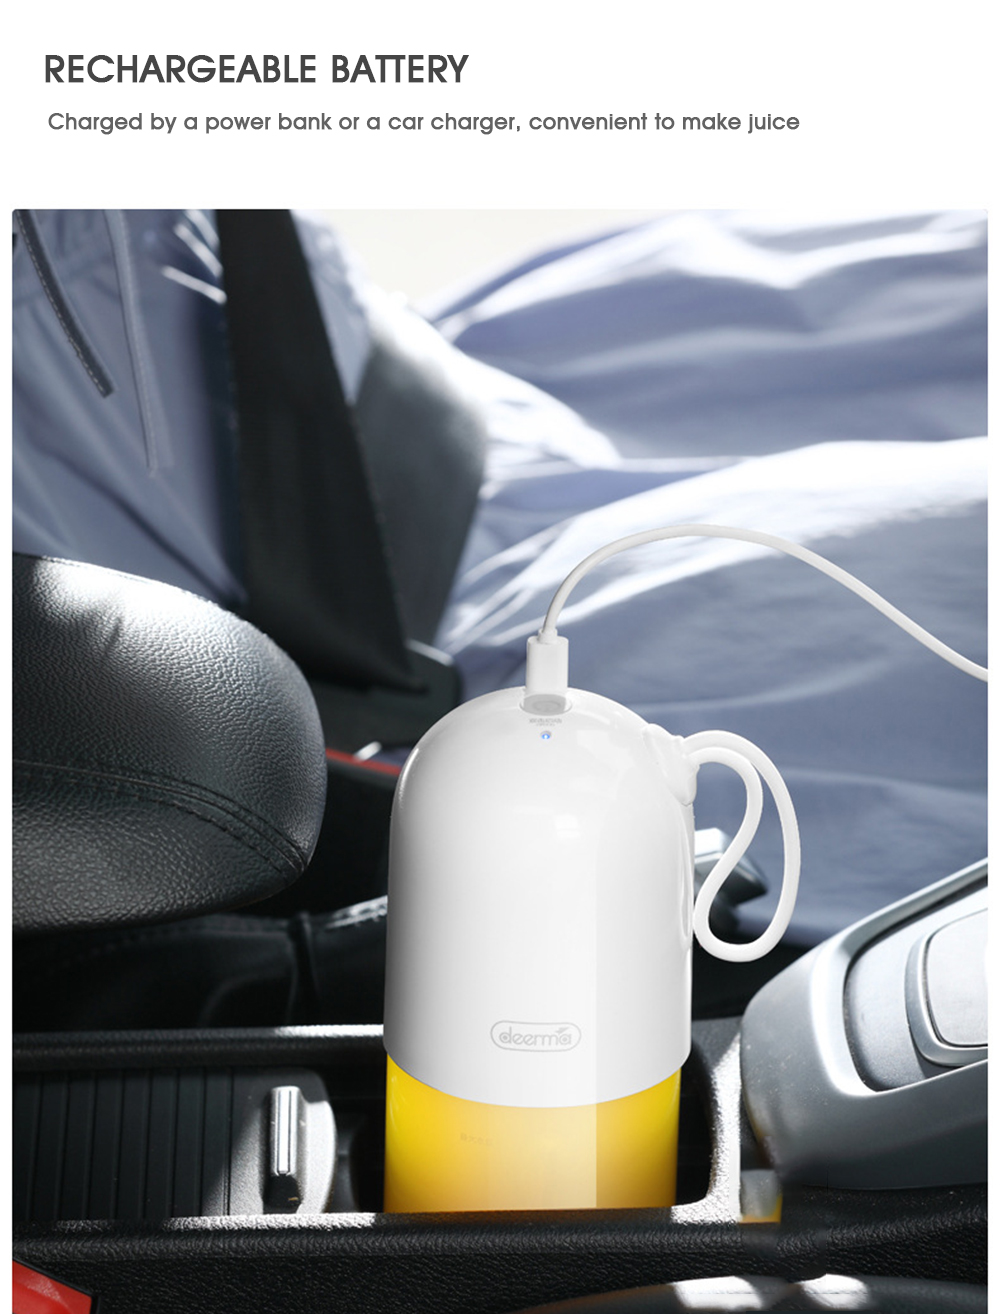 deerma DEM - NU01 Portable Juicer Mini Capsule Shape Electric Juice Cup for Travel Gym